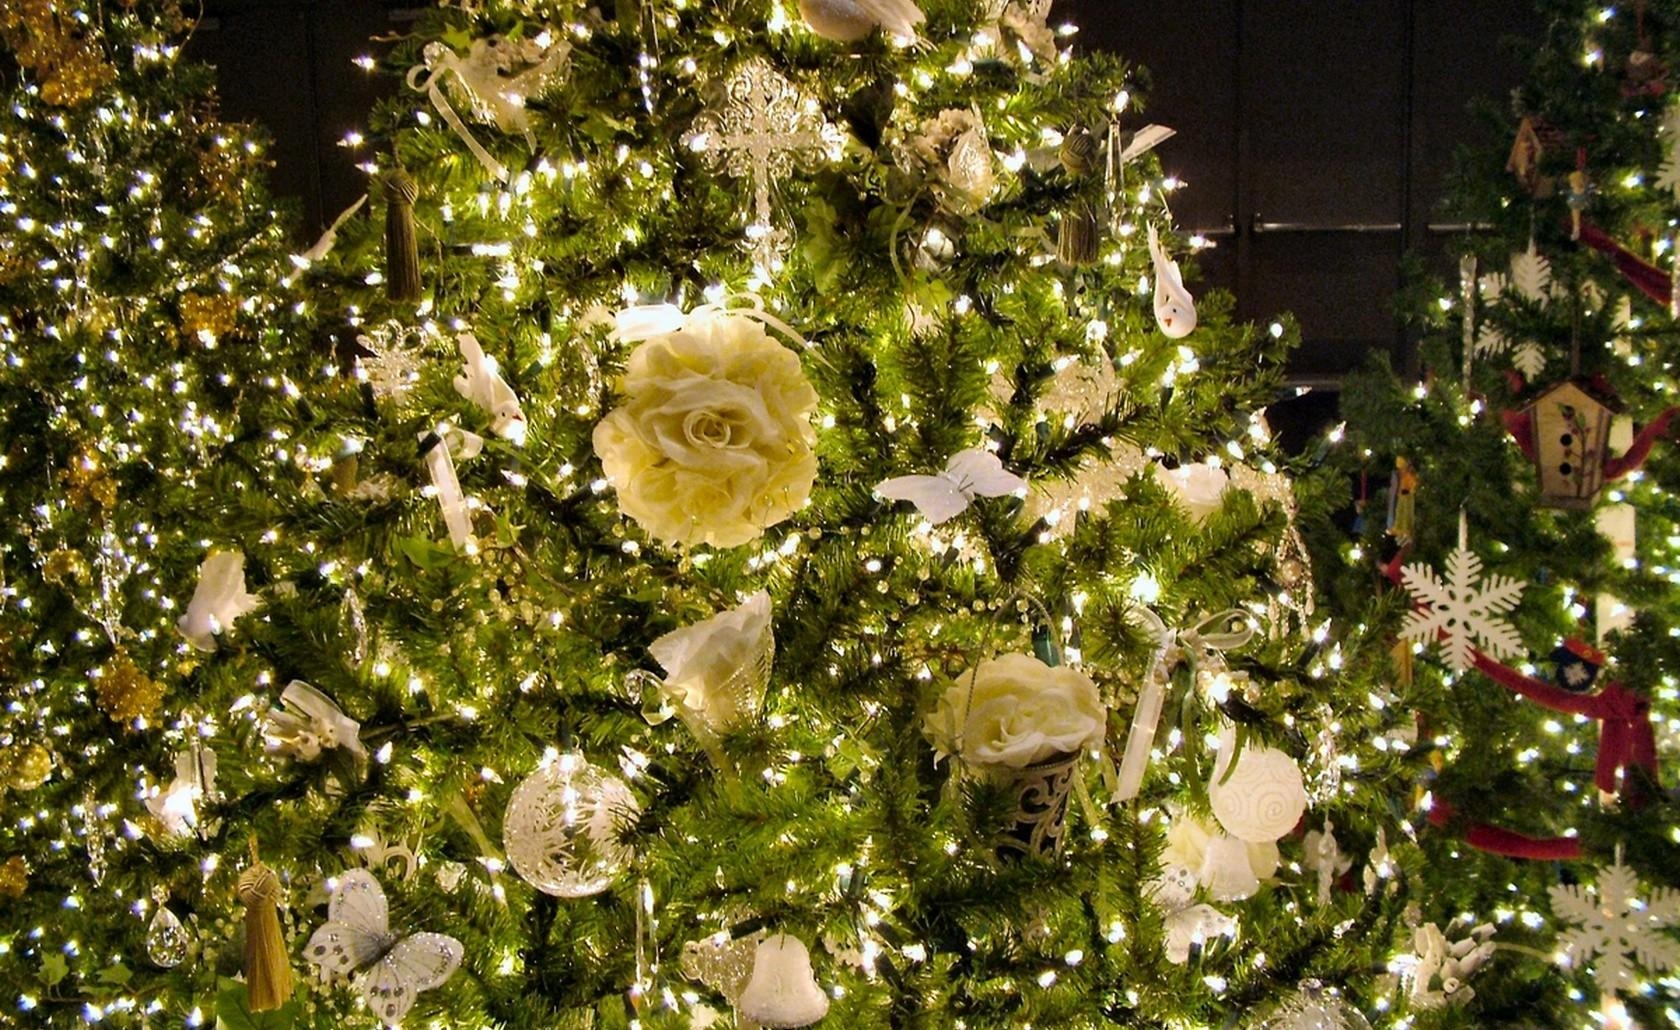 fir trees, holidays, decorations, snowflakes, holiday, garland, garlands